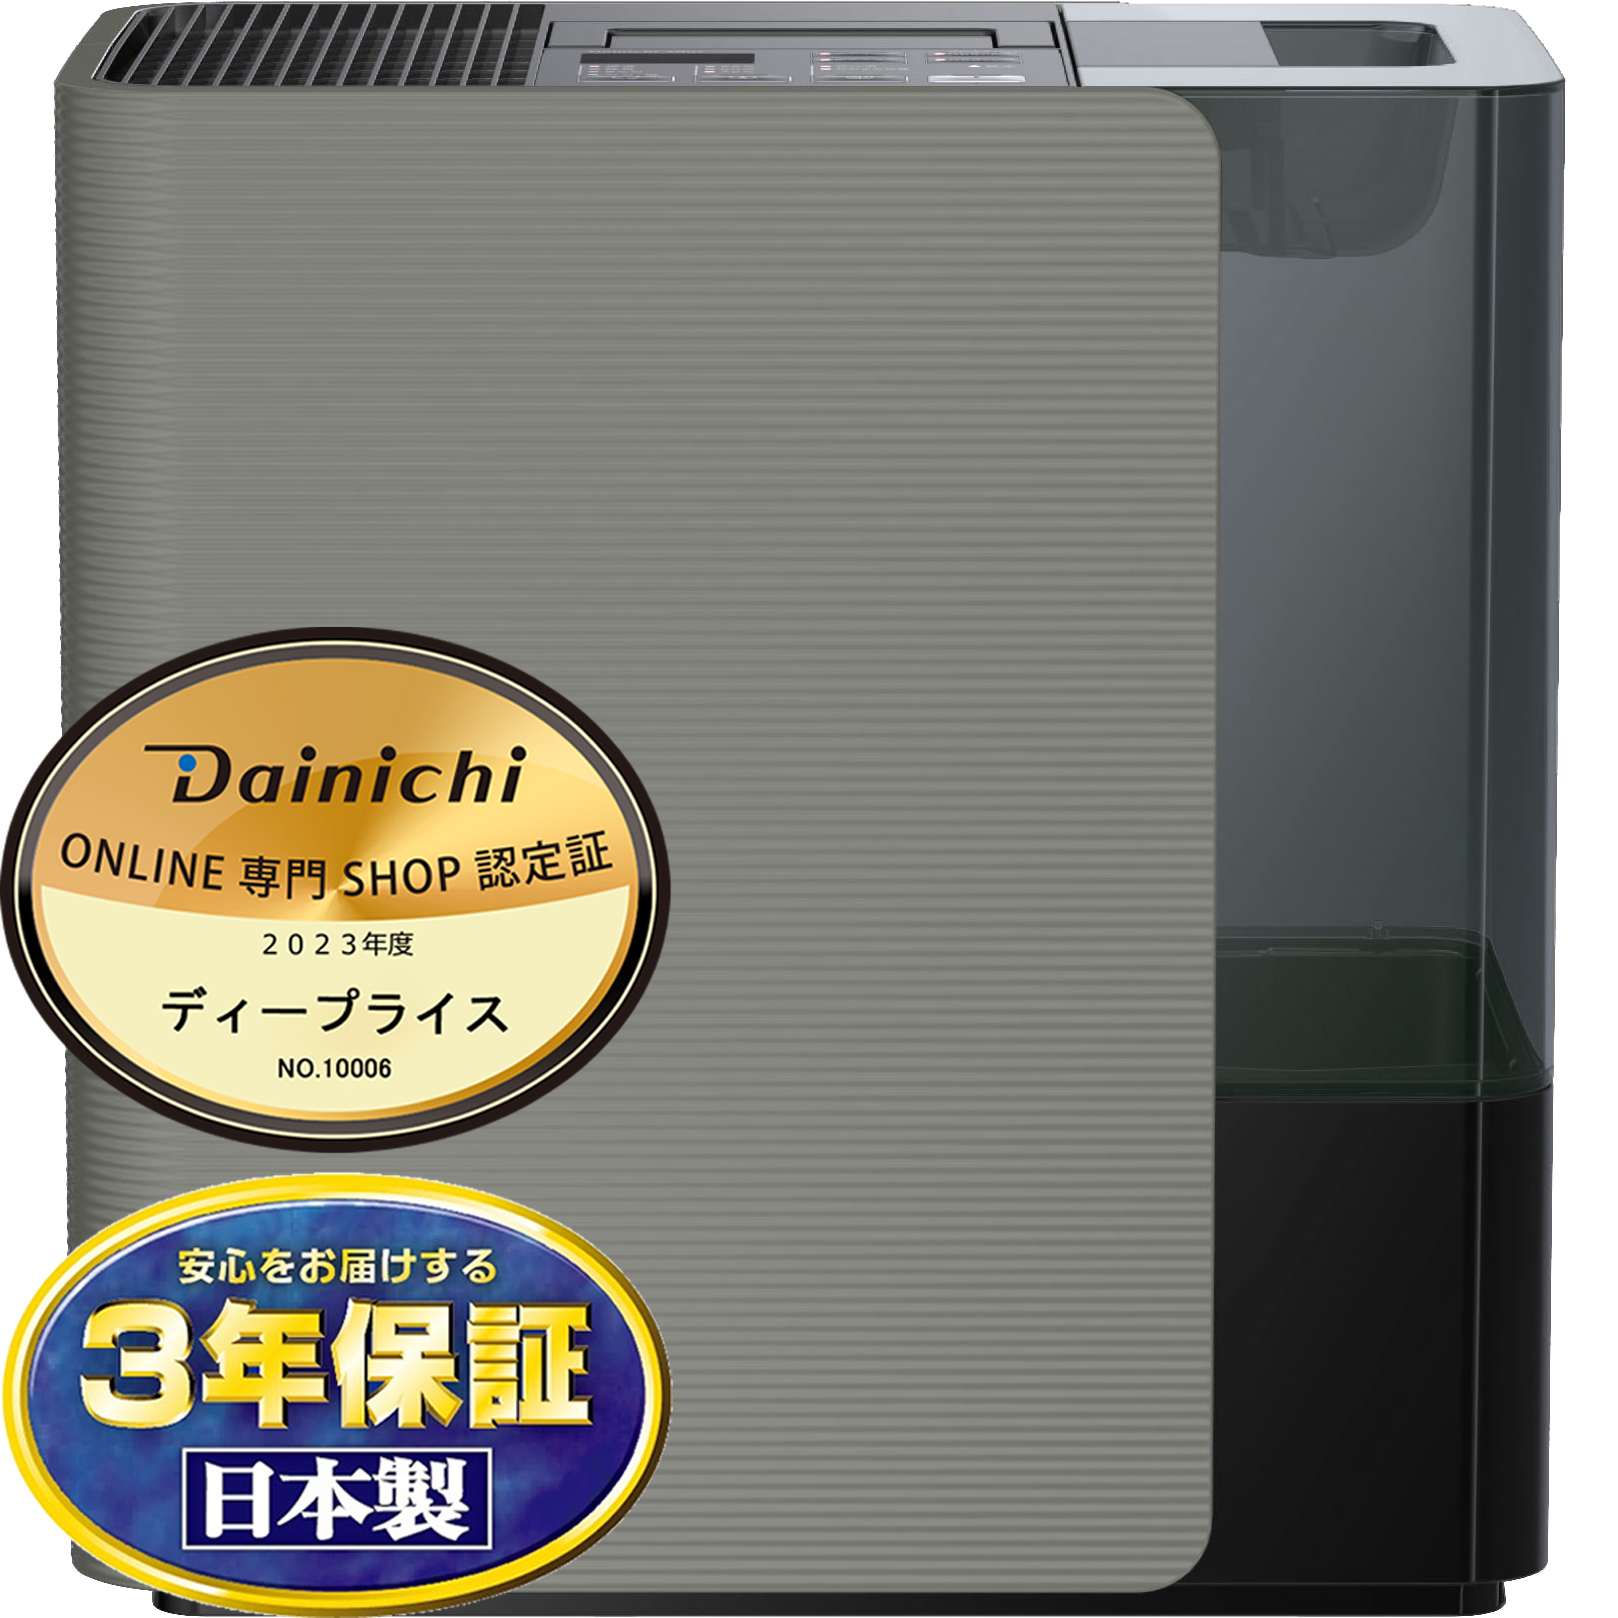 DAINICHI(ダイニチ) ハイブリッド式加湿器 『LXタイプ』 HD-LX1022-H 